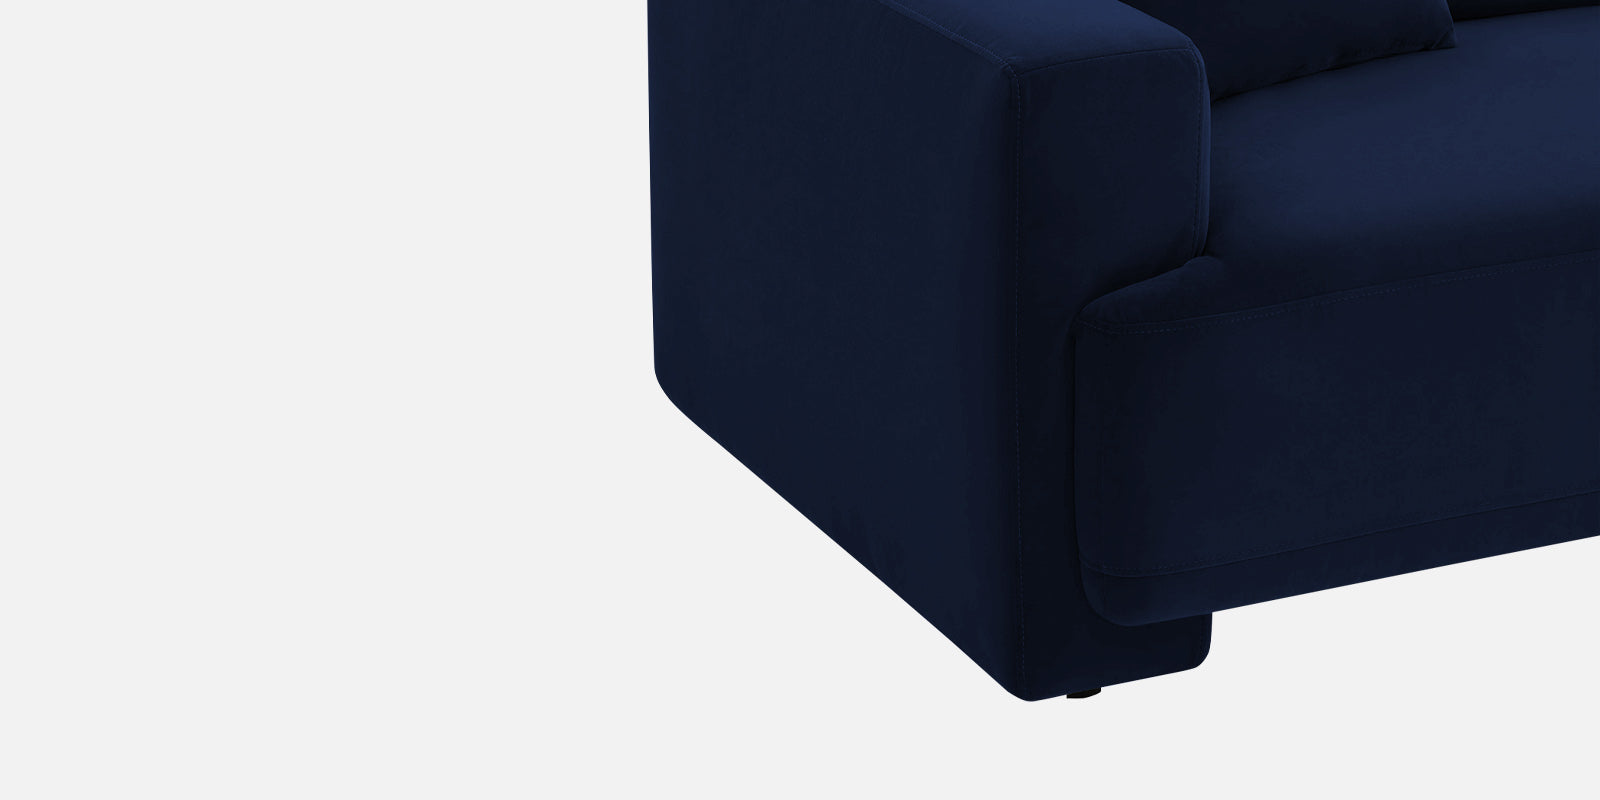 Kosta Velvet 2 Seater Sofa in Indigo Blue Colour